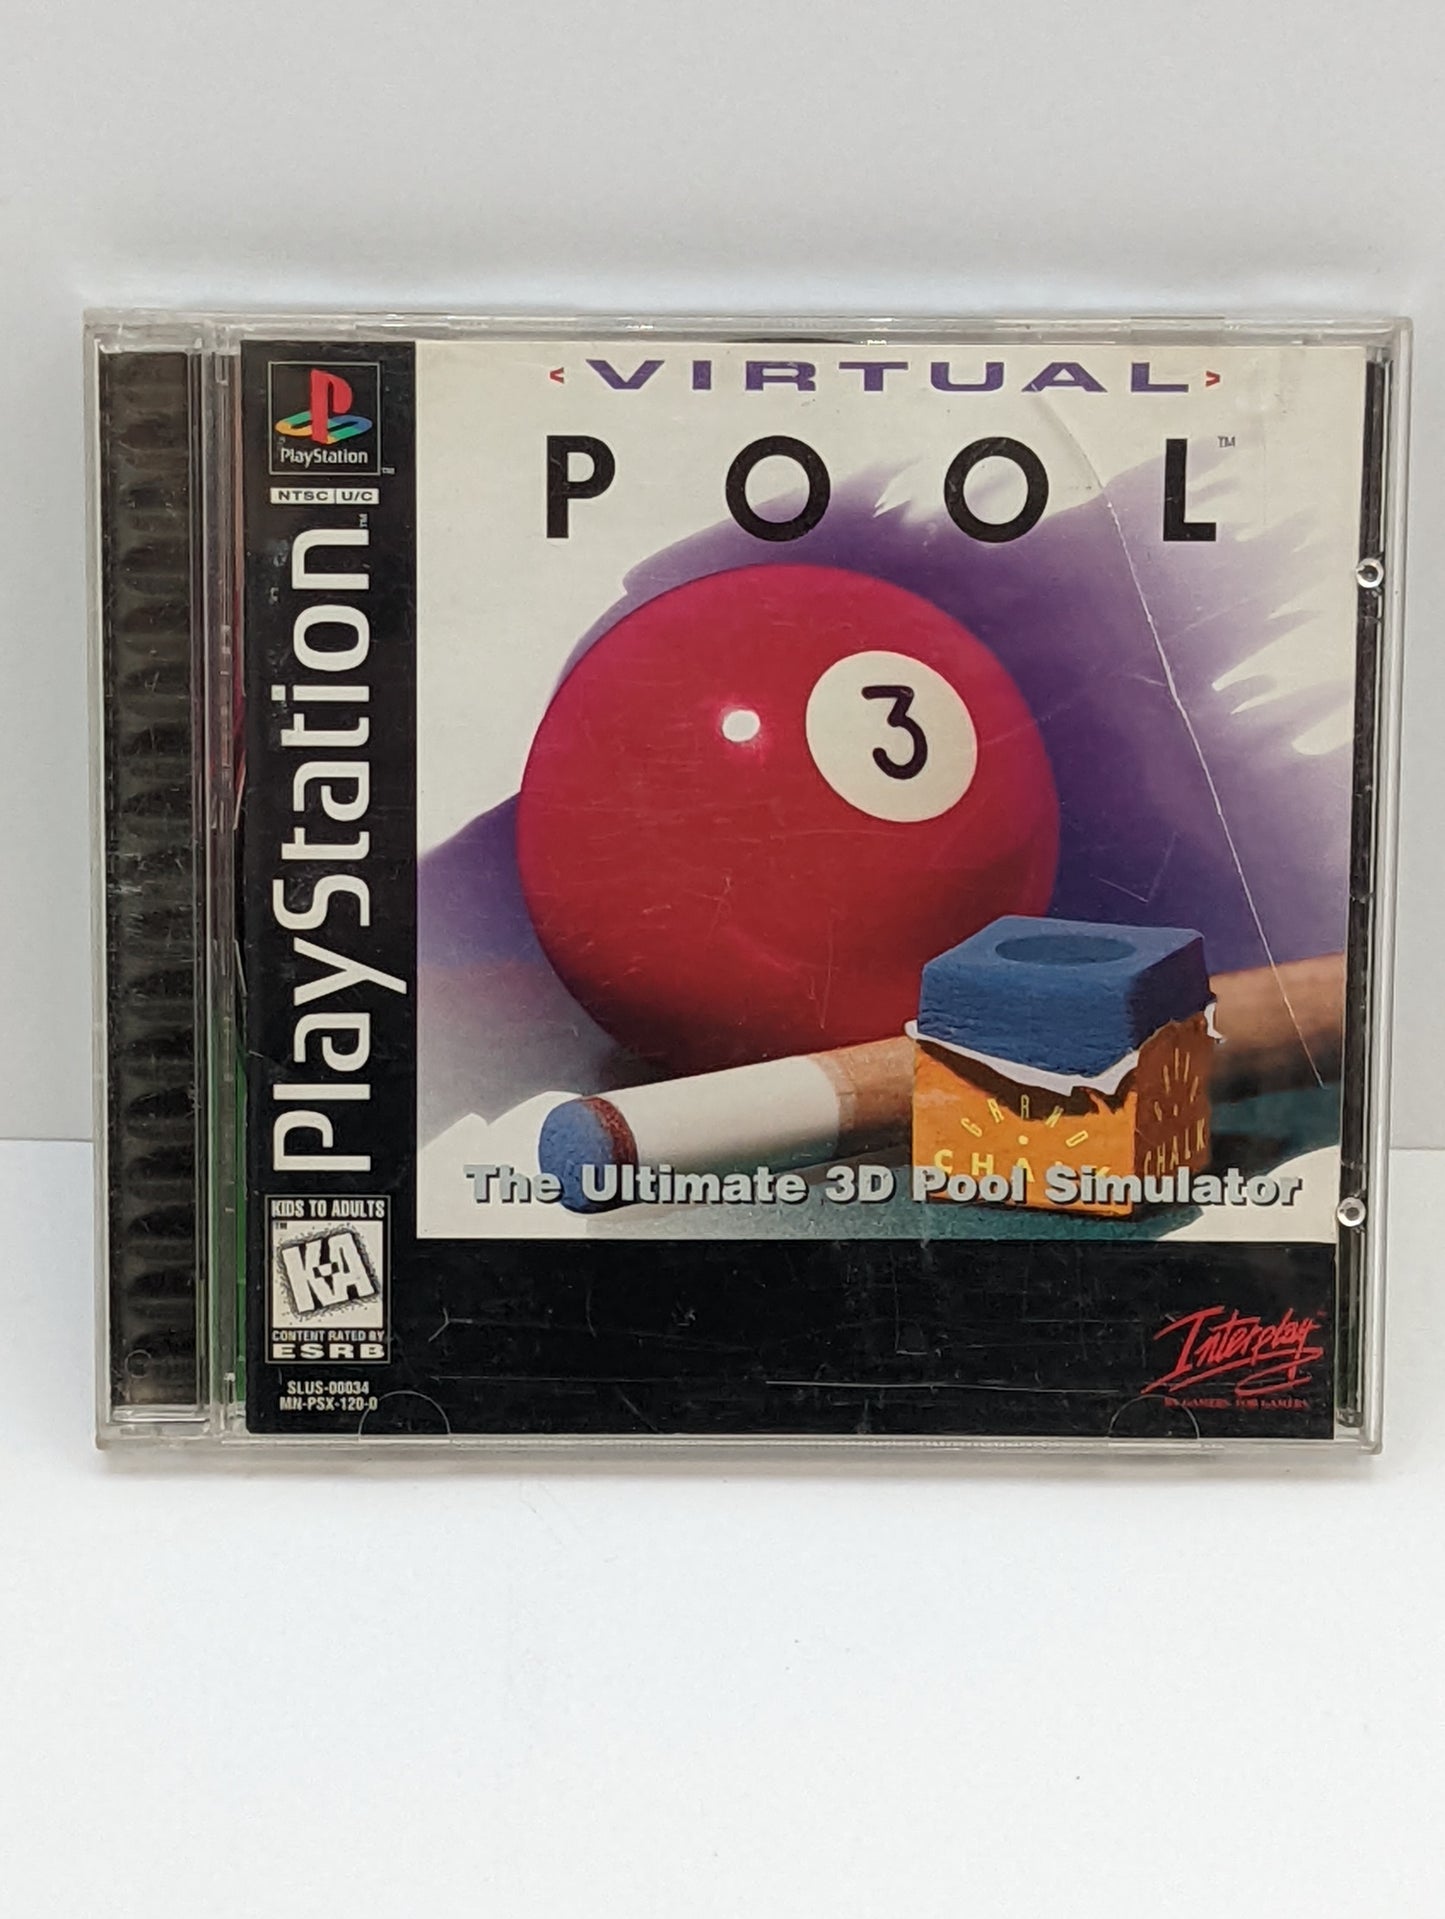 PlayStation Virtual Pool